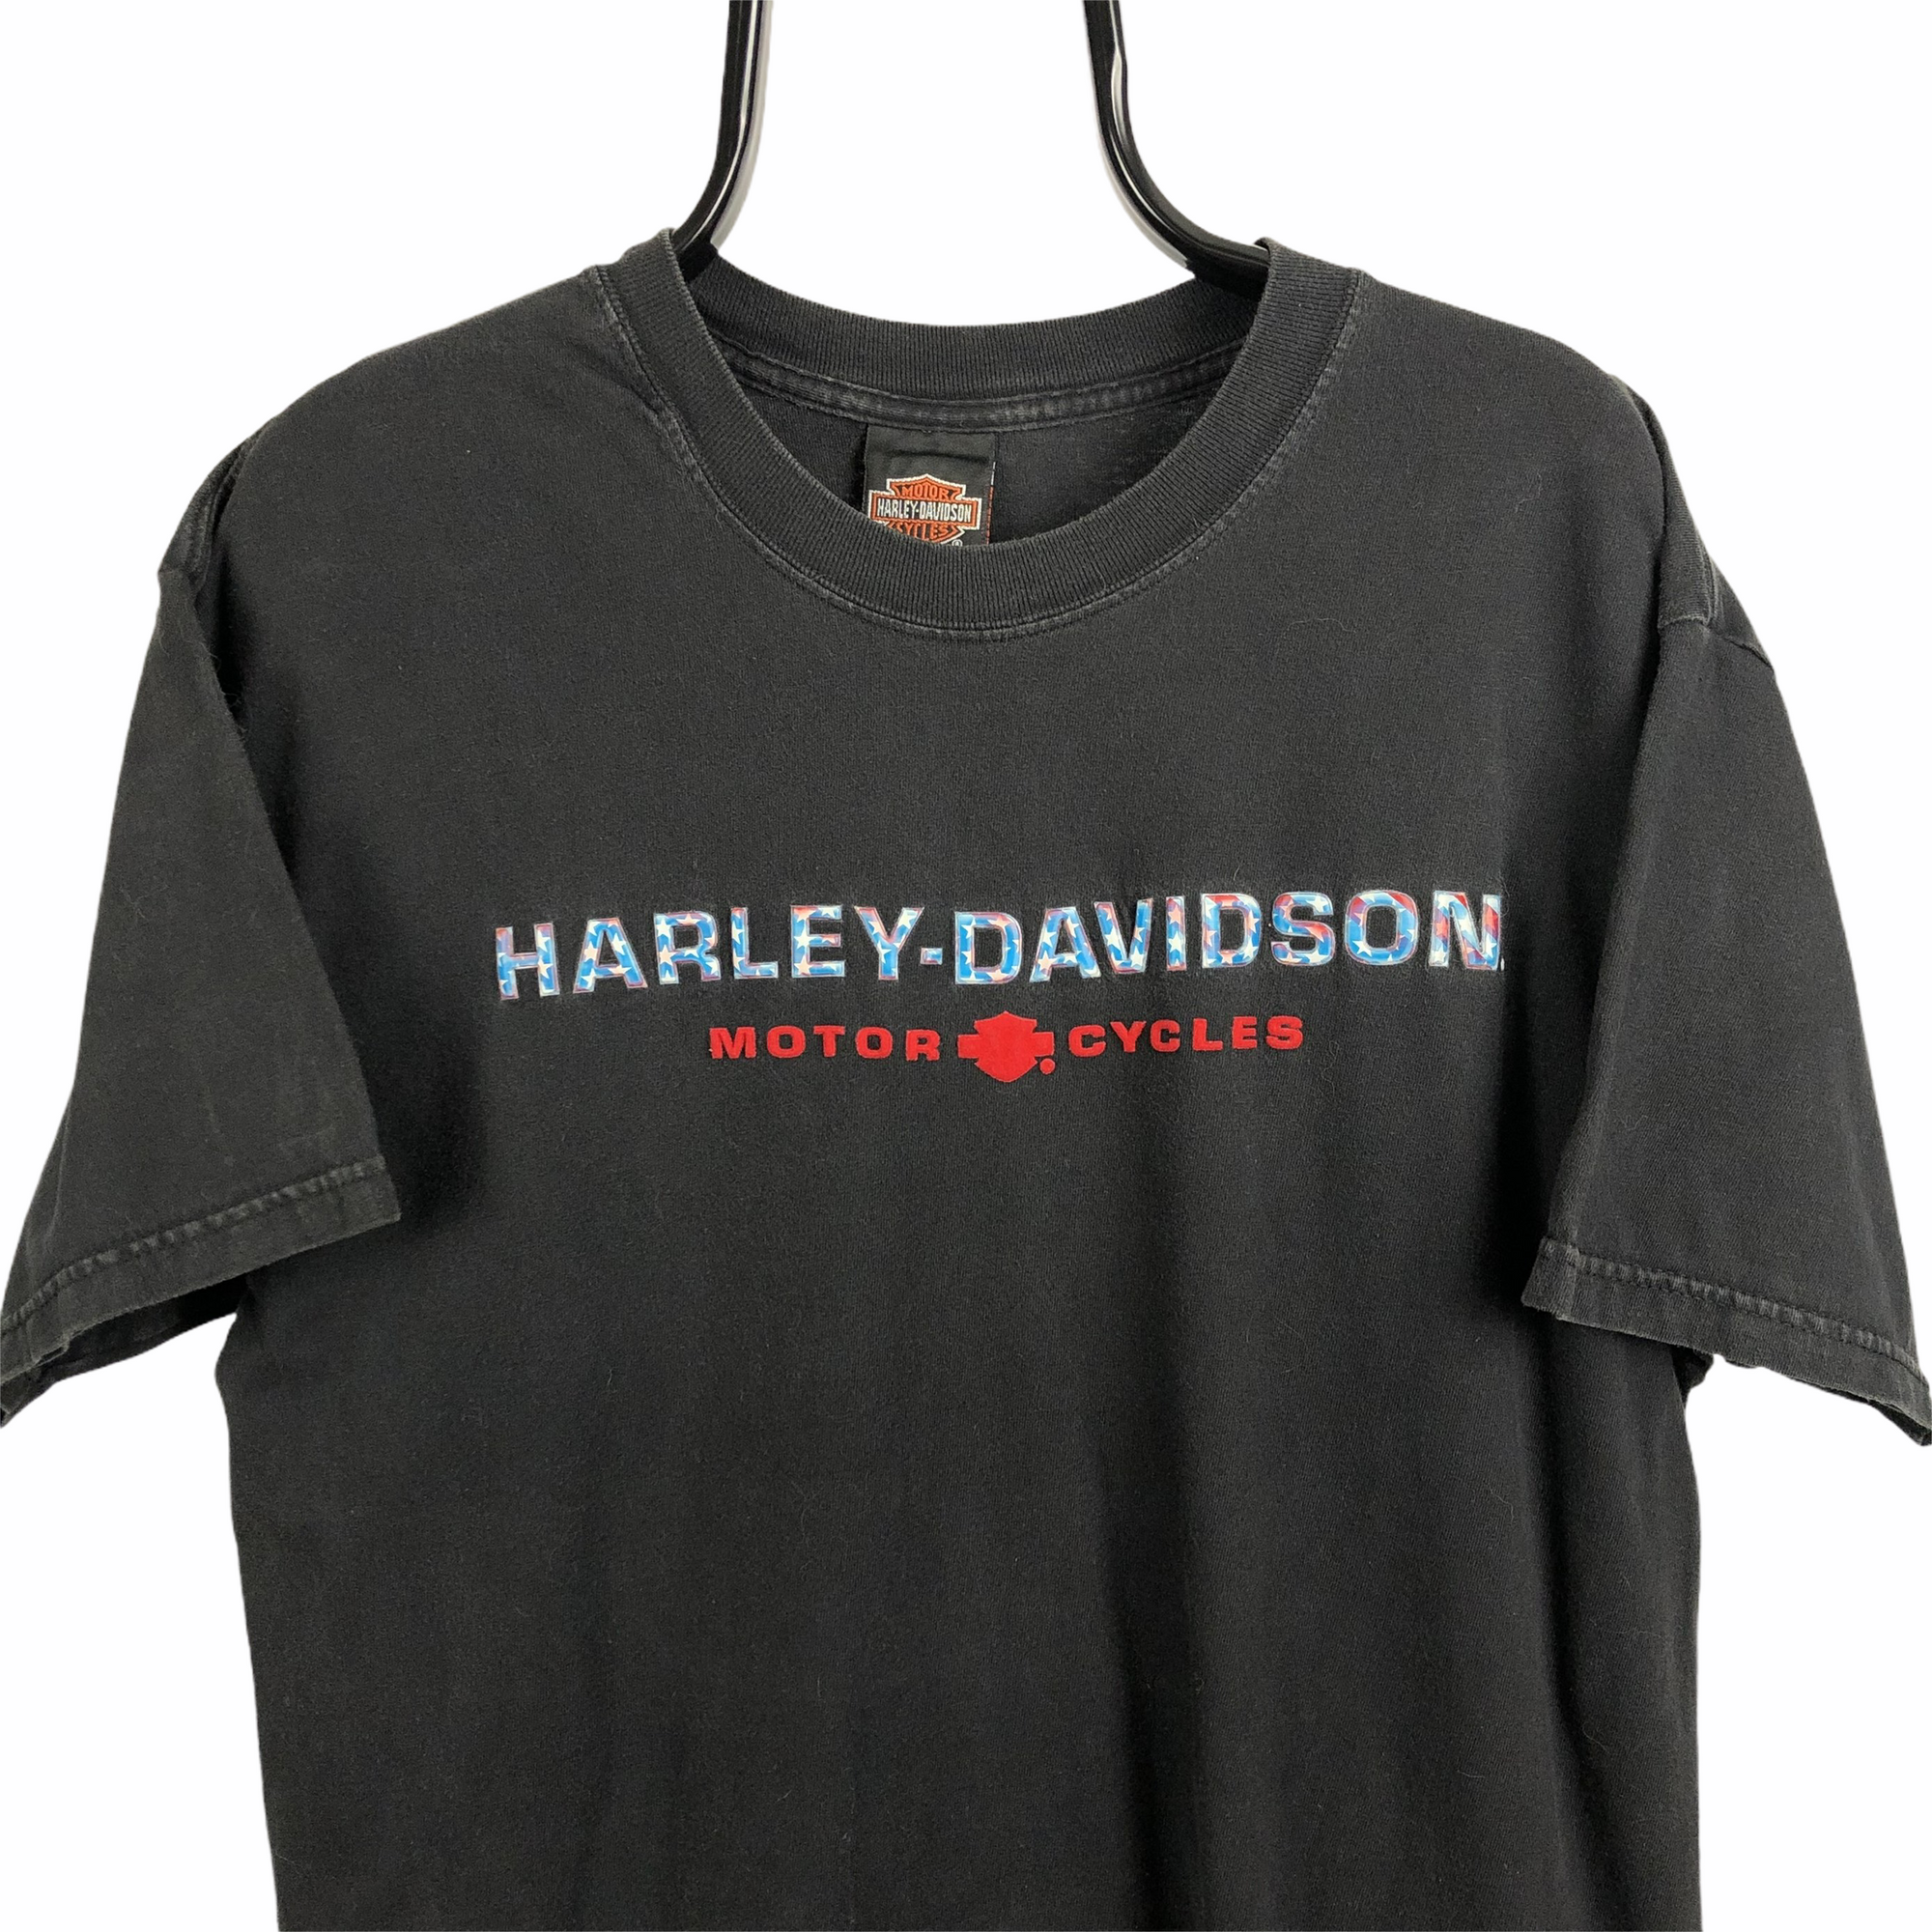 Vintage Harley Davidson Las Cruces Tee in Washed Black - Men's Large/Women's XL